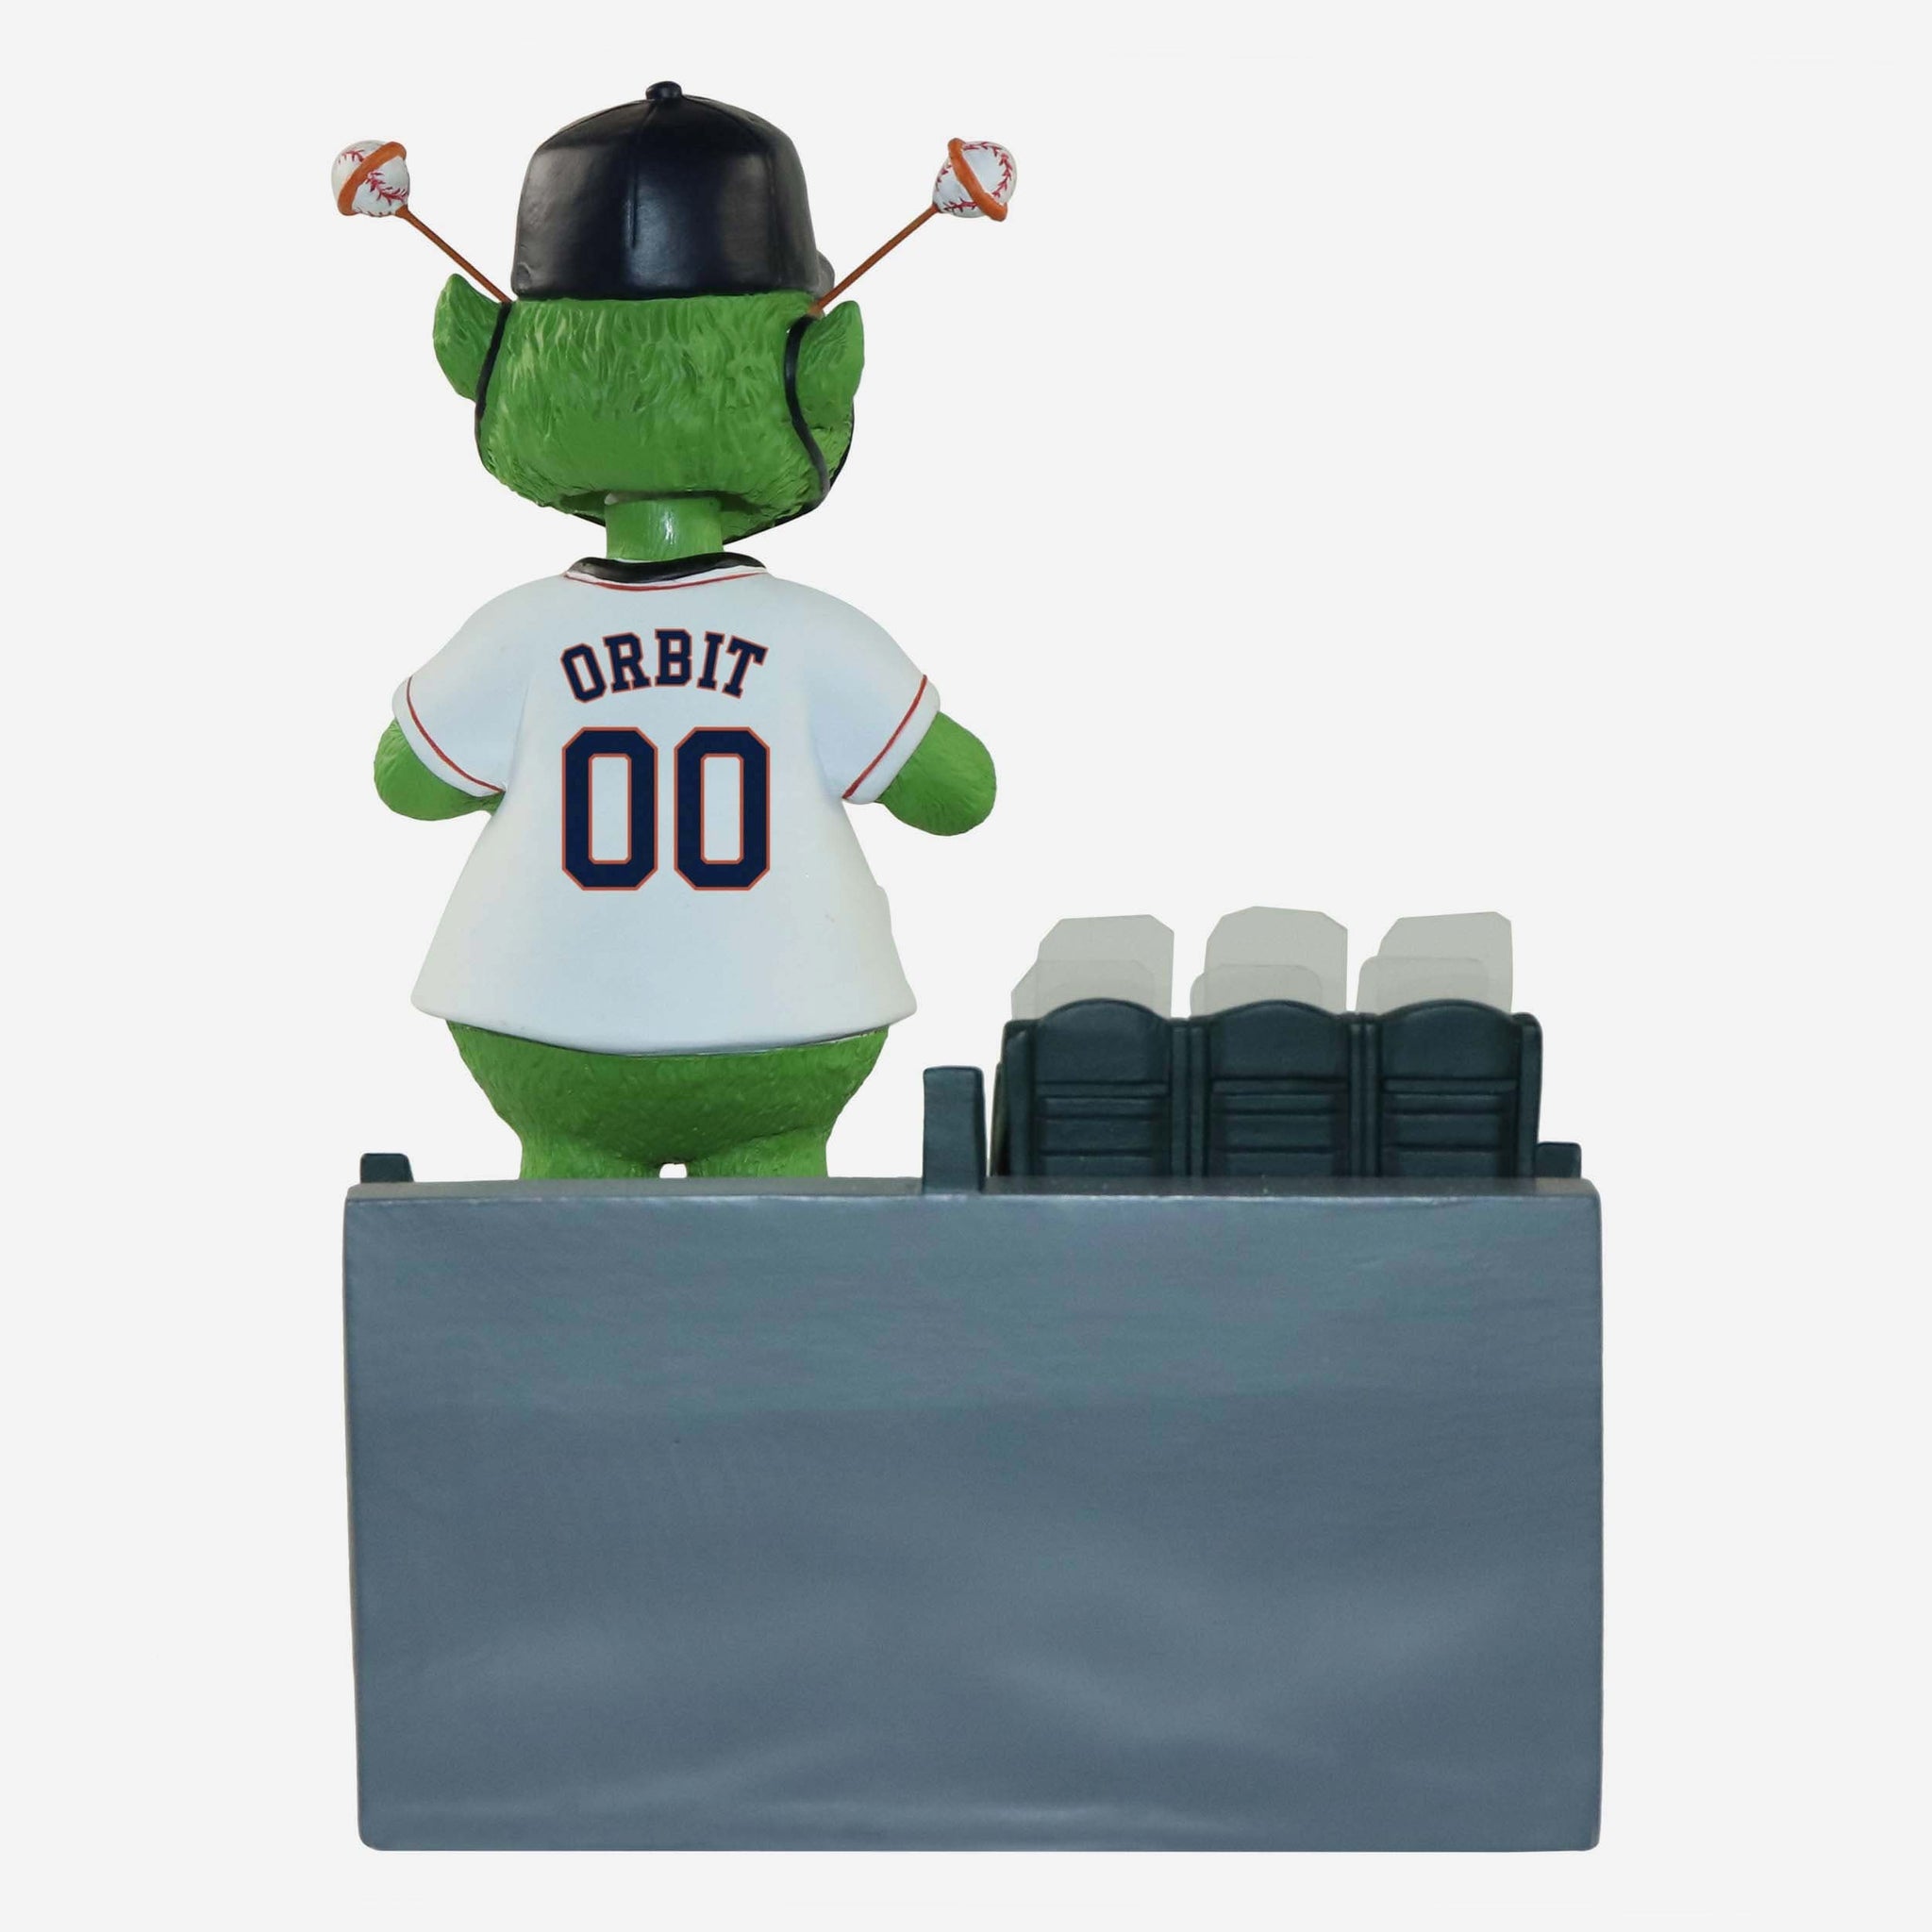 Orbit Houston Astros The Show Goes On Mascot Bobblehead